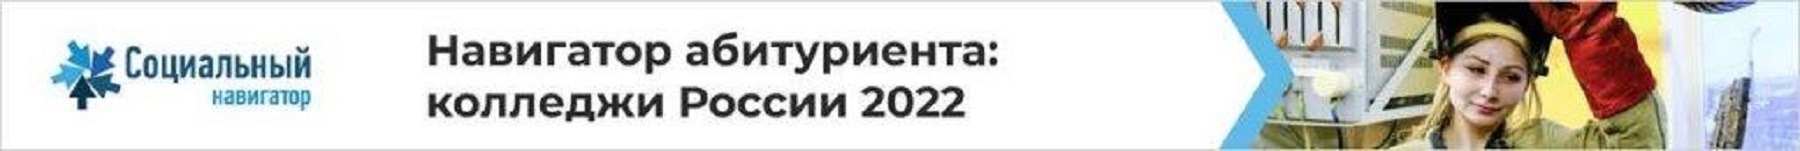 Навигатор абитуриента: колледжи России 2022.